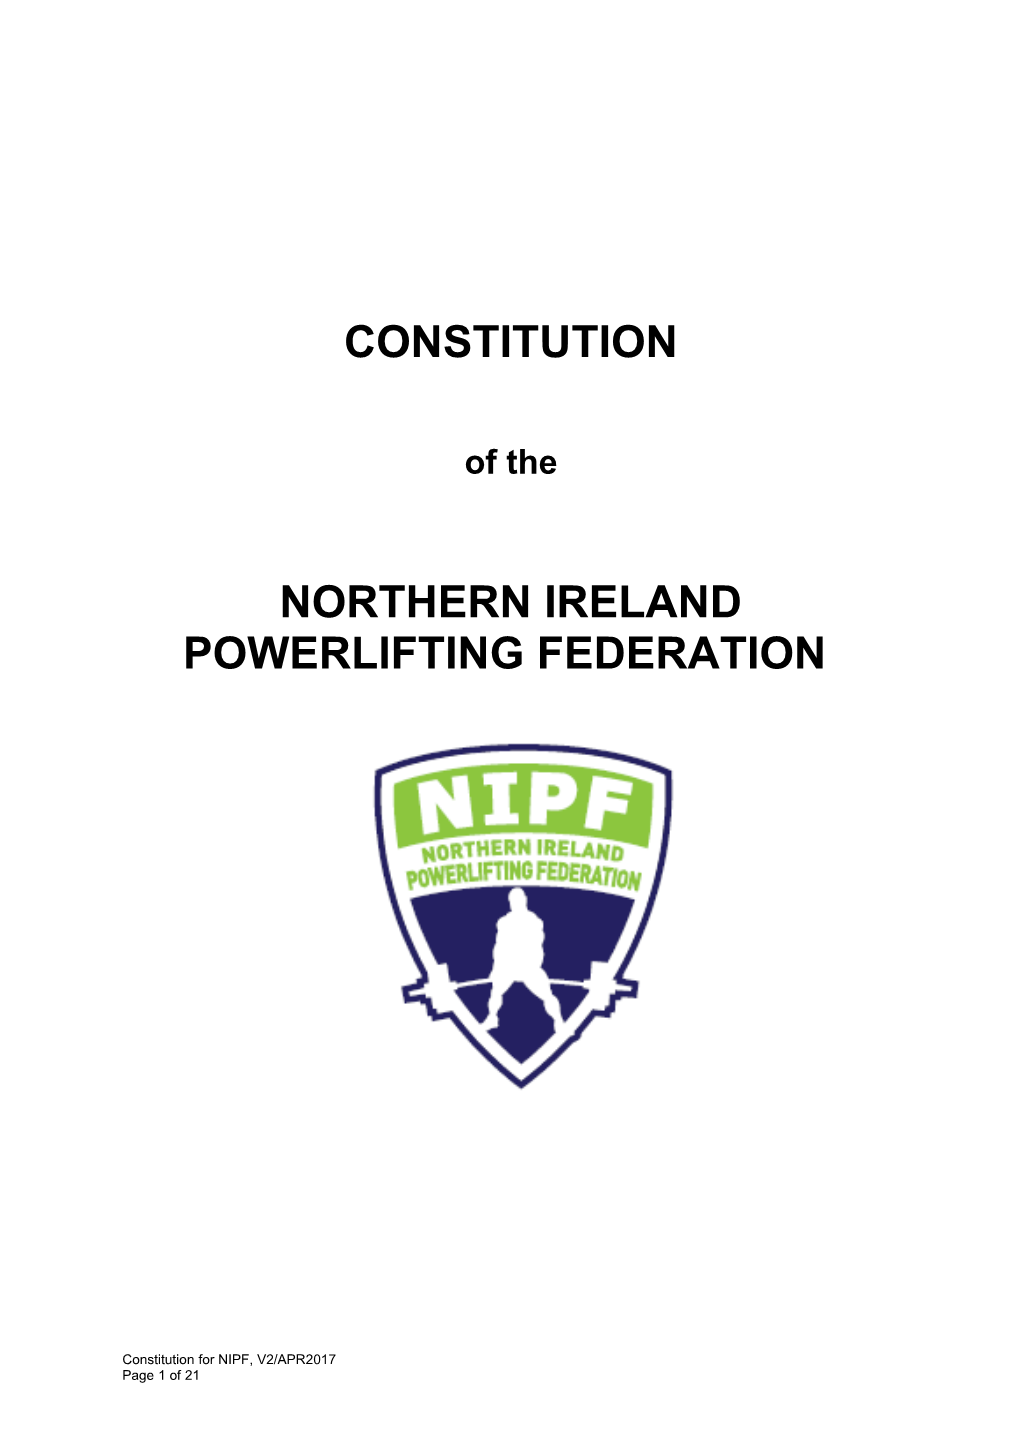 Northern Ireland Powerlifting Federation